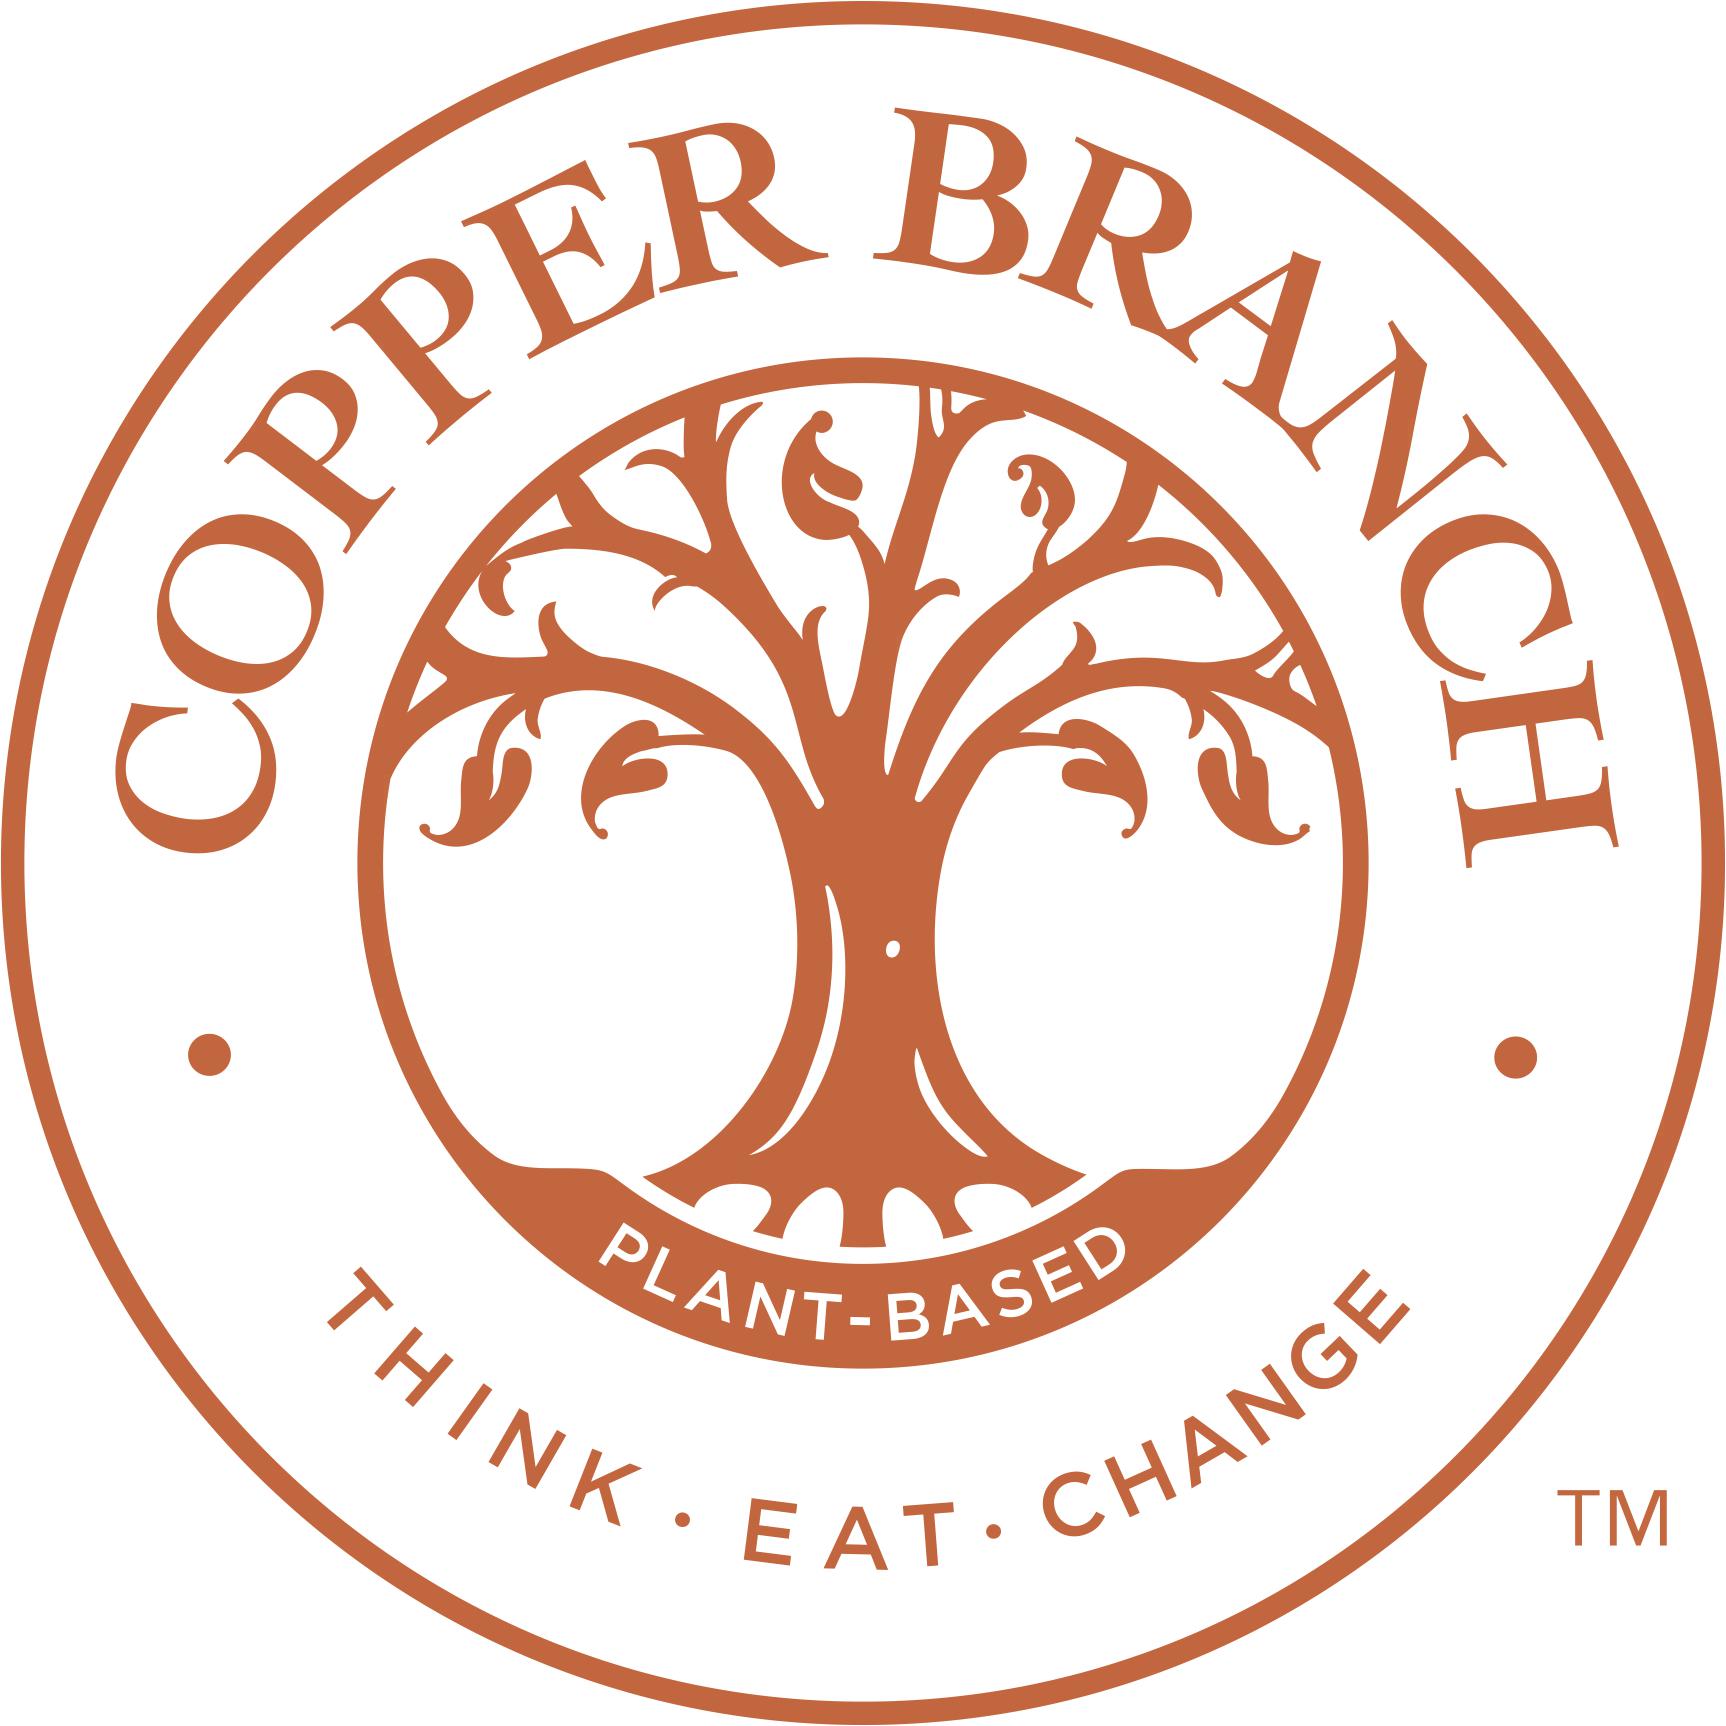 Copper Branch Stanley St